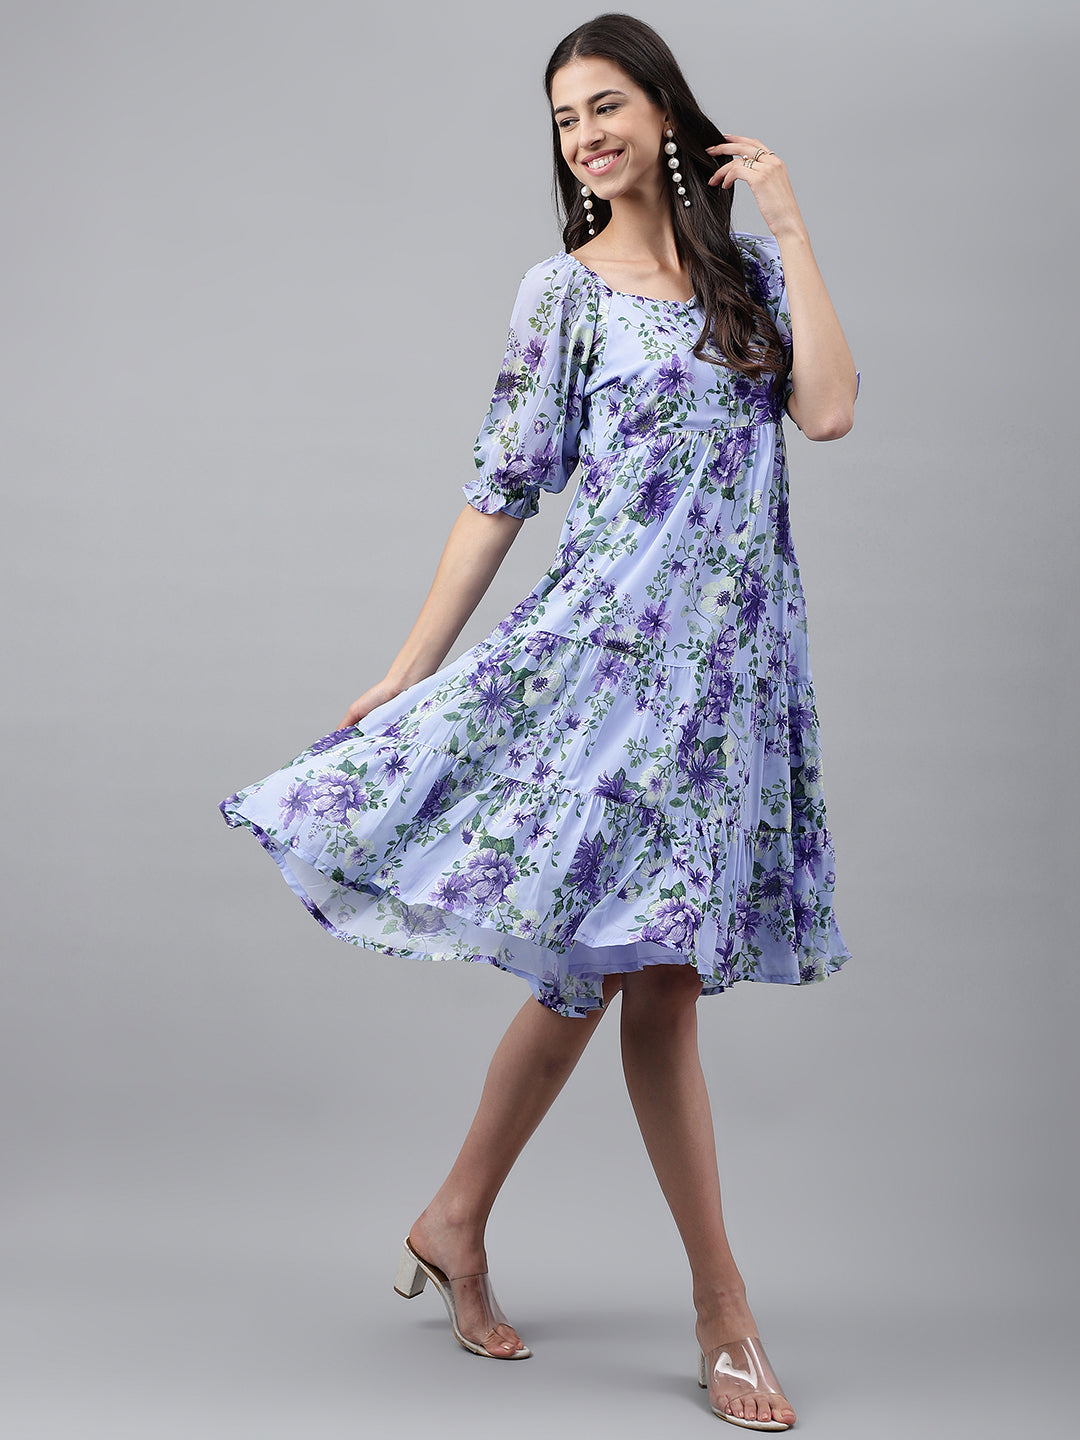 Women's Floral Printed Lavender Georgette Dress - Janasya